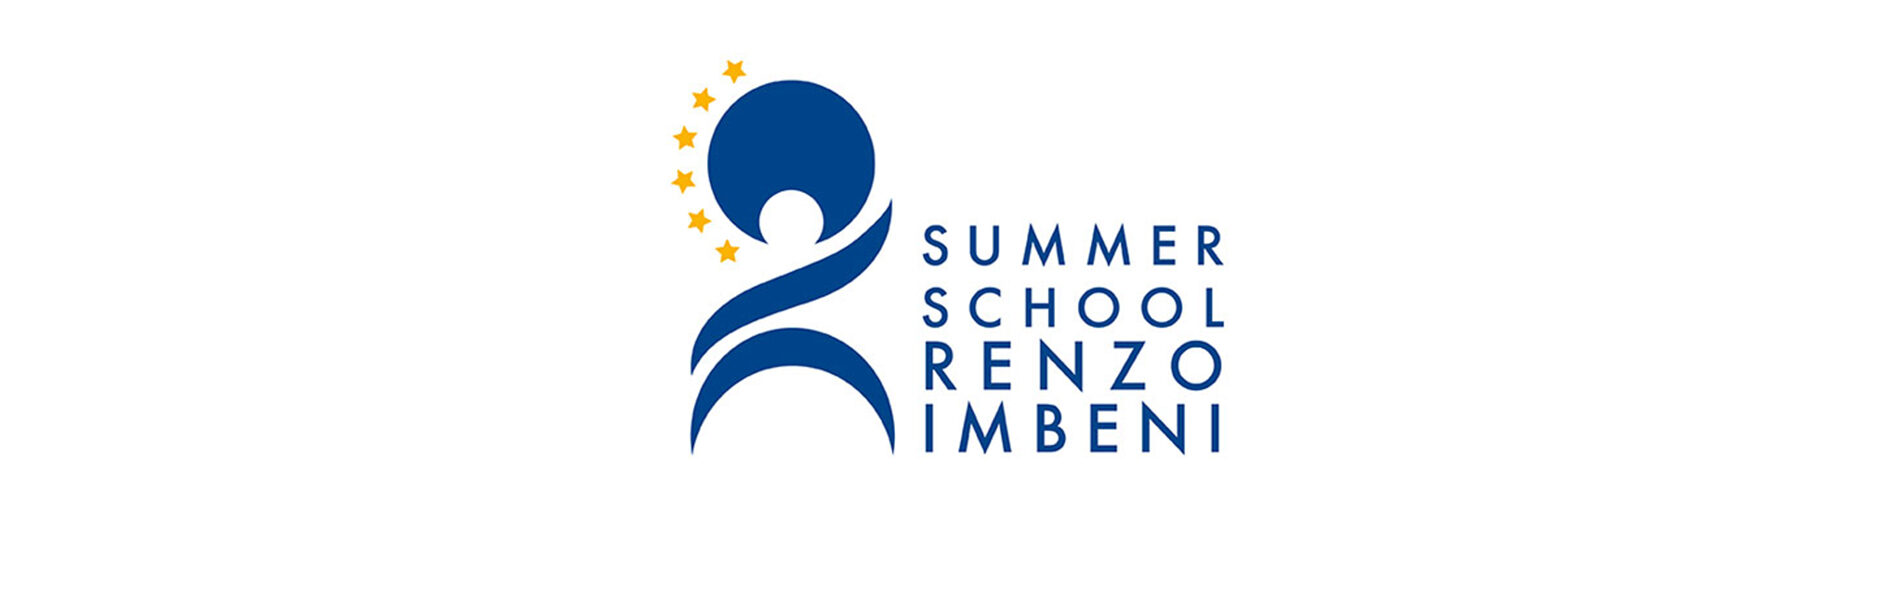 Summer School_Notizia